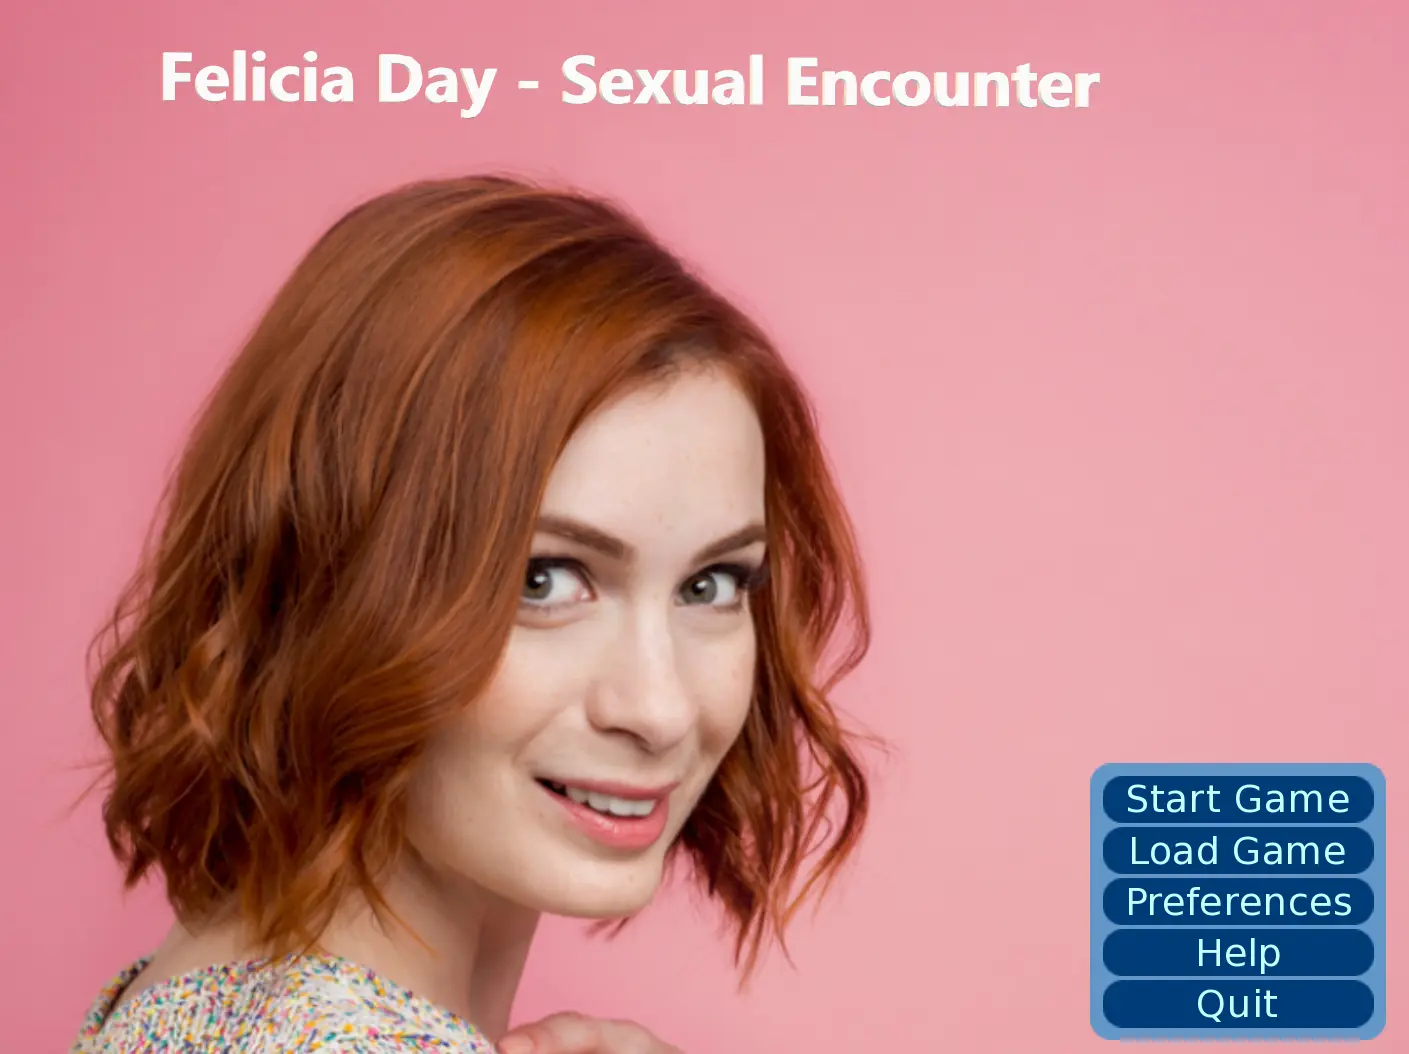 Felicia Day - Sexual Encounter main image